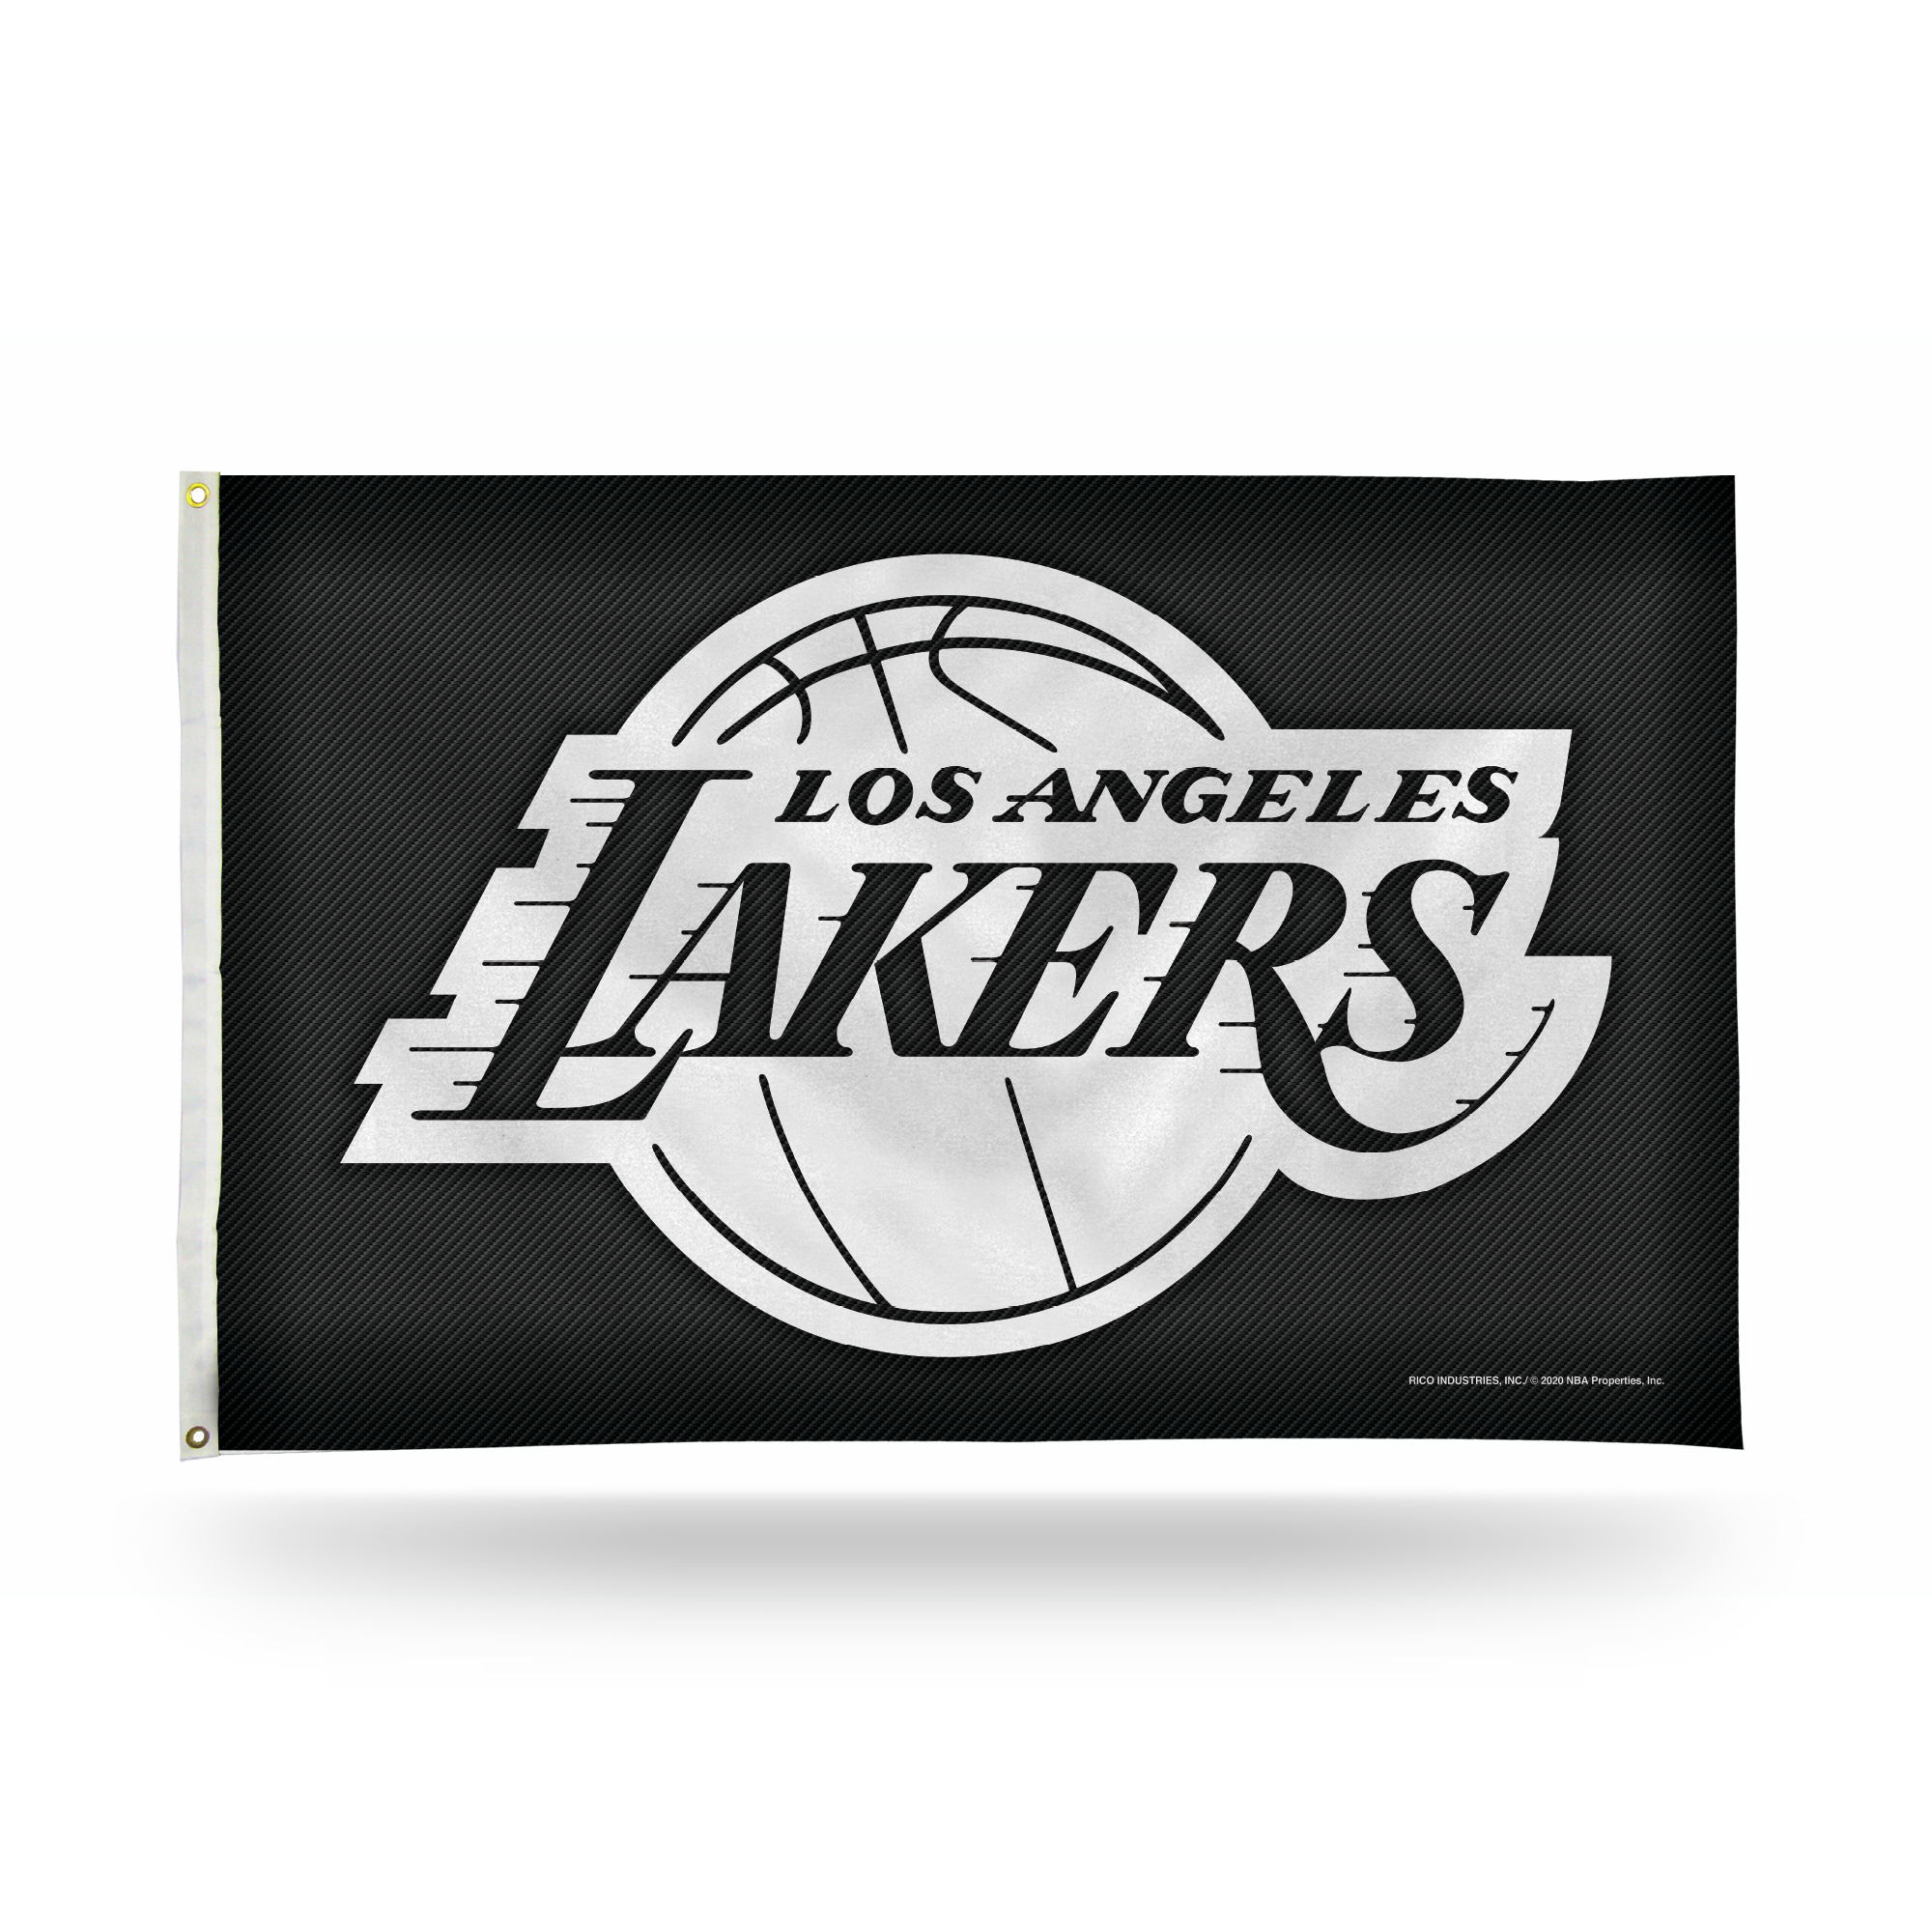 Rico NBA Rico Industries Los Angeles Lakers Carbon Fiber 3' x 5' Banner Flag